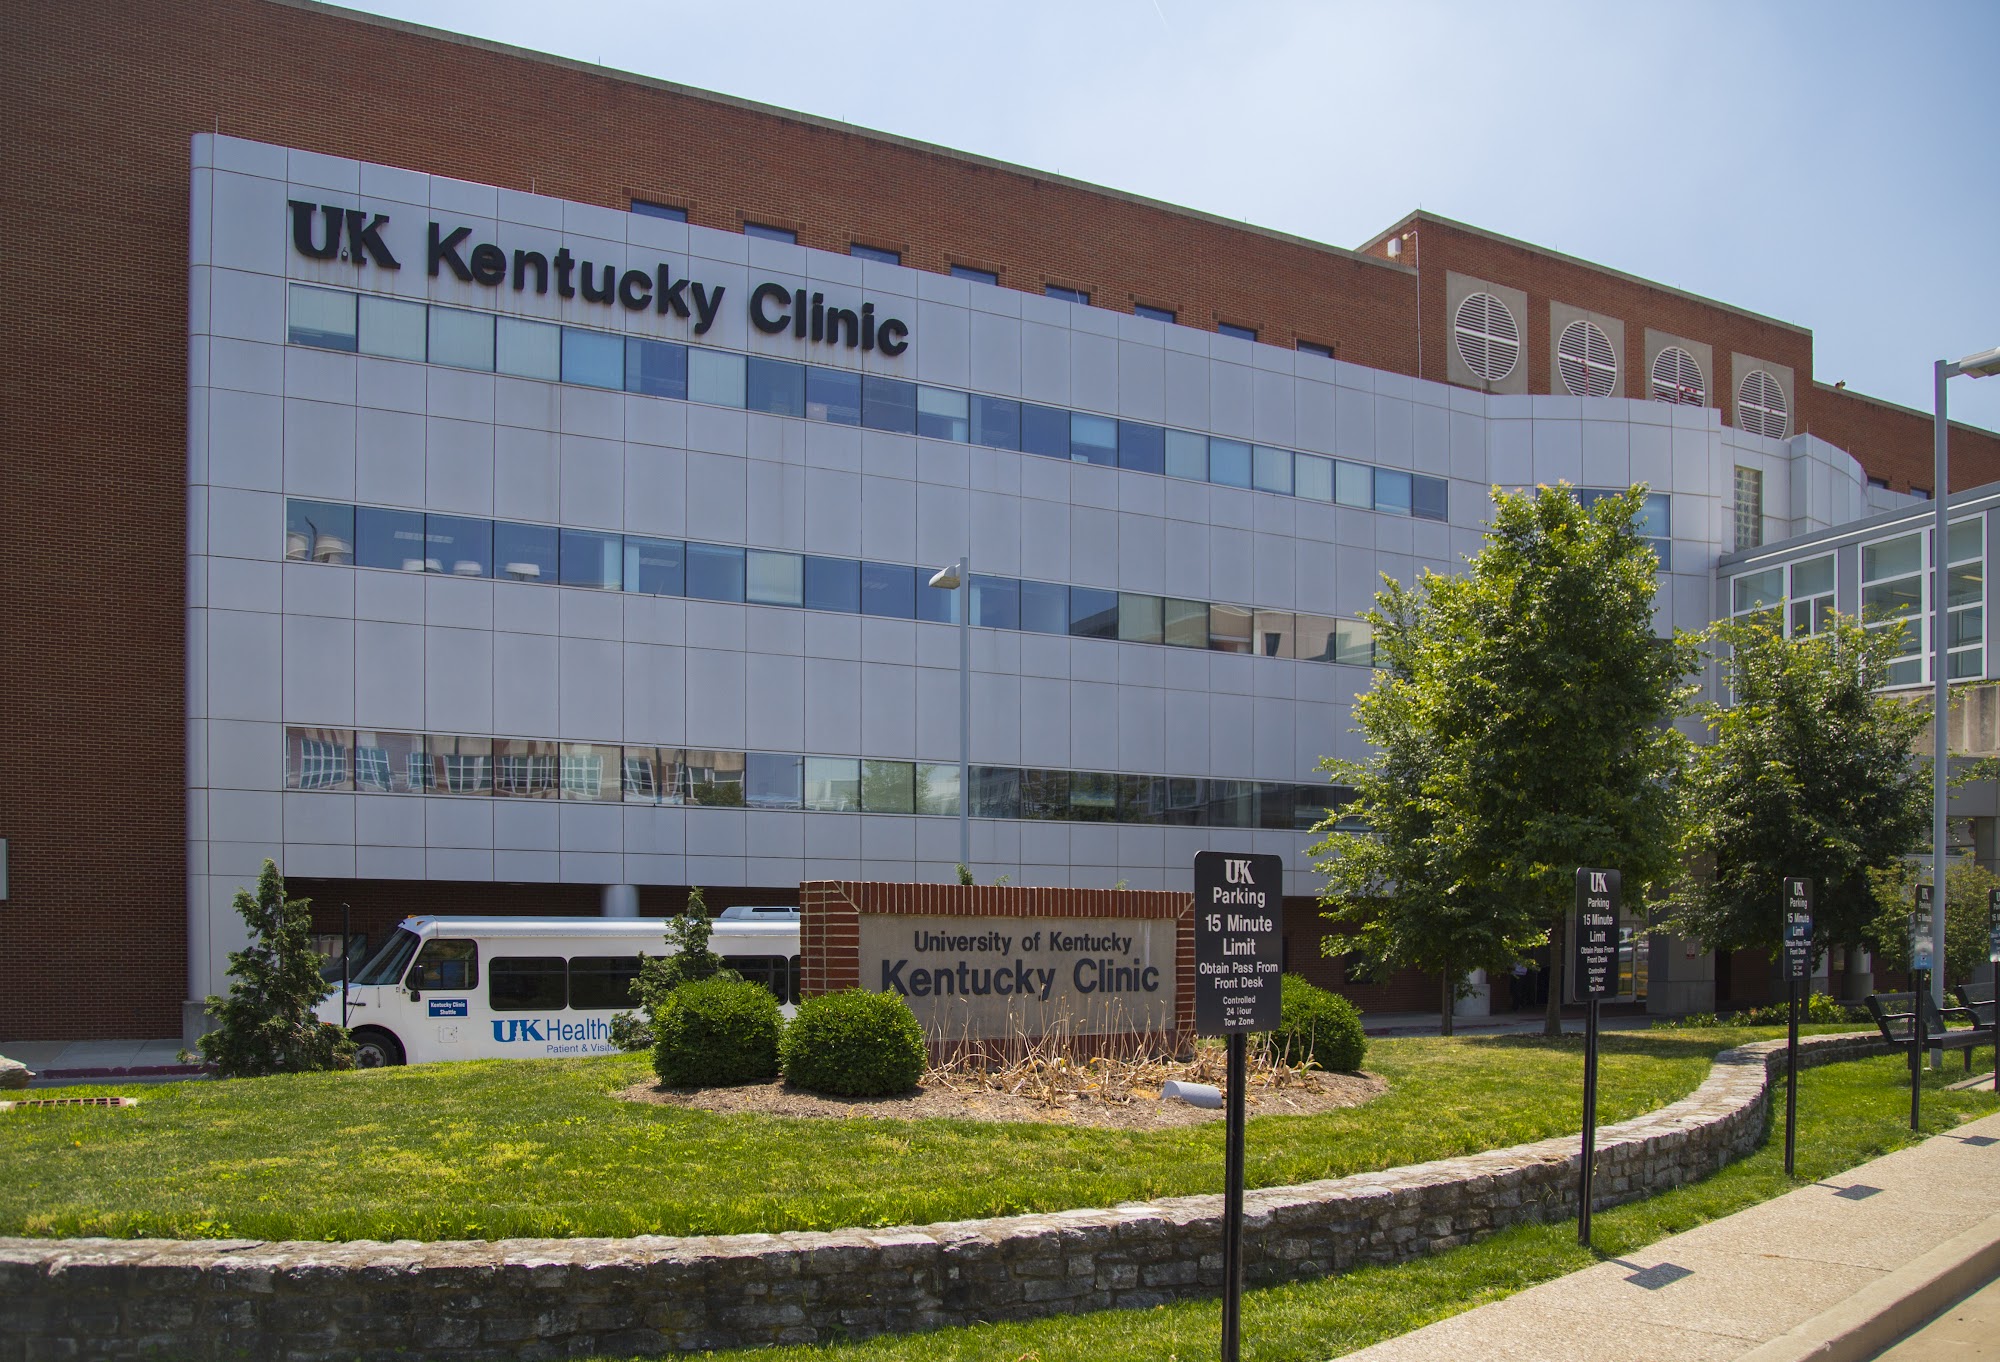 UK Kentucky Clinic Pharmacy